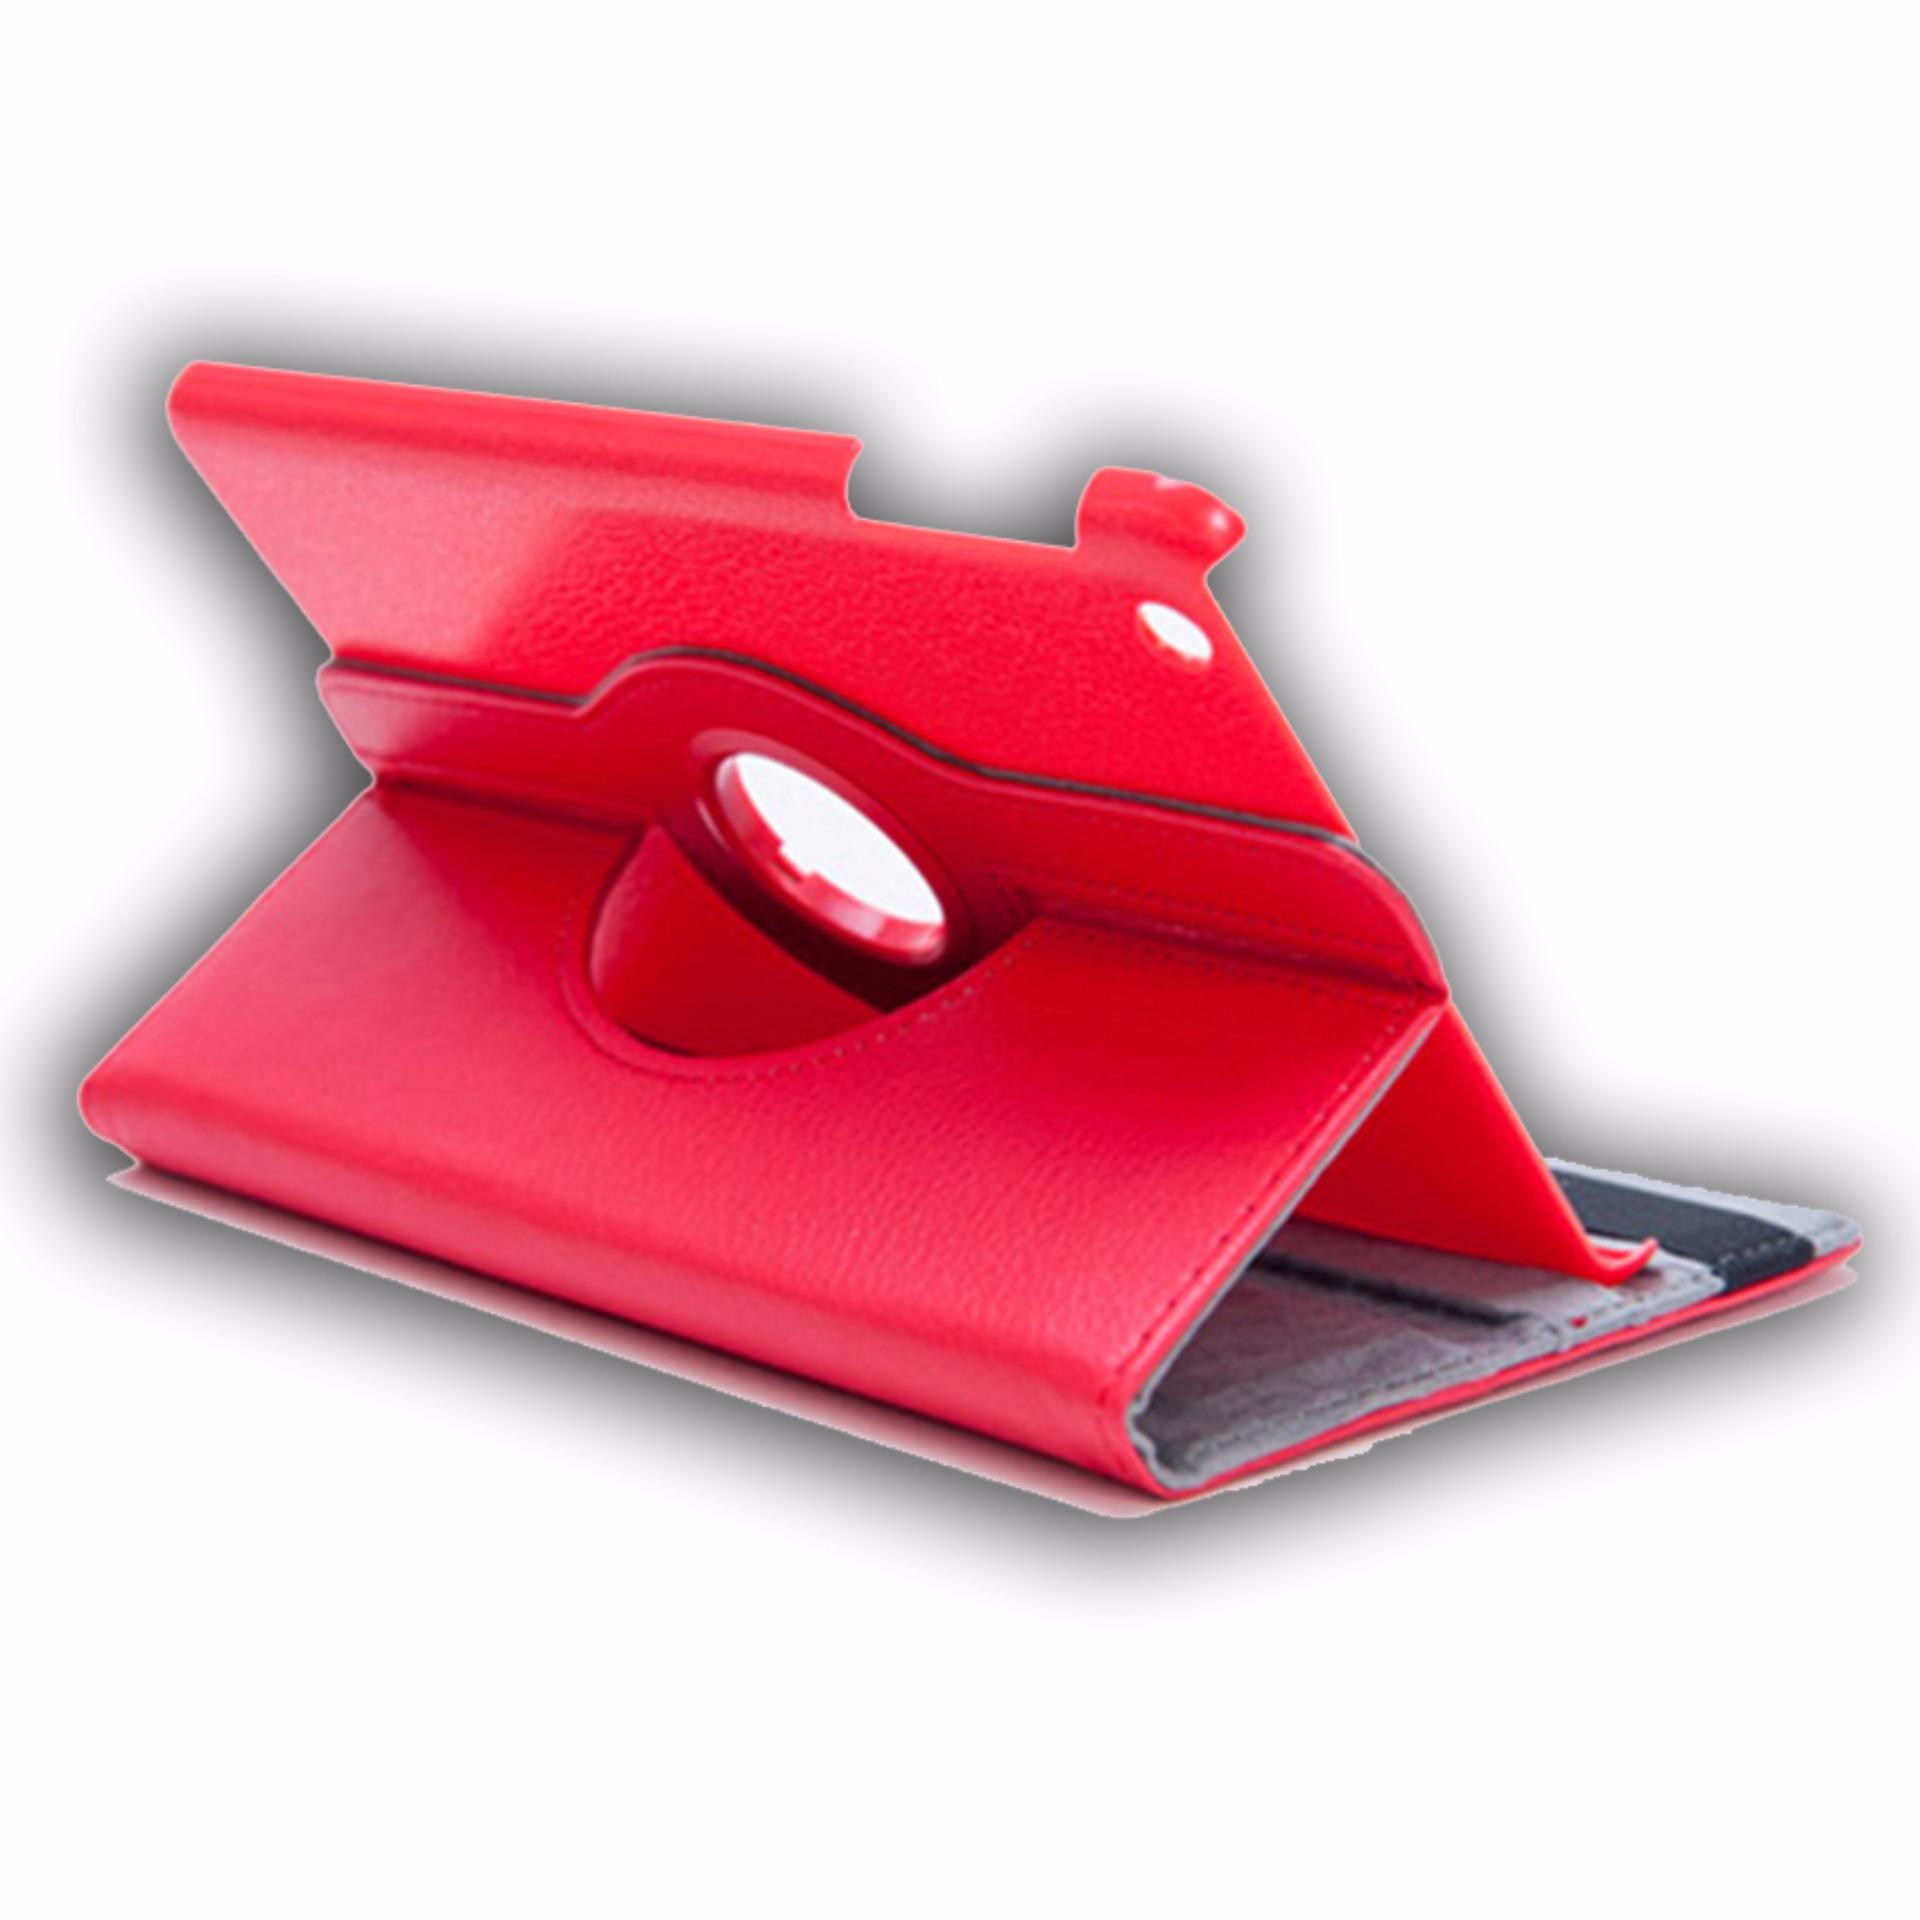 Bao da dành cho iPad 2 3 4 Xoay 360 - Lopez Cute (Đỏ)